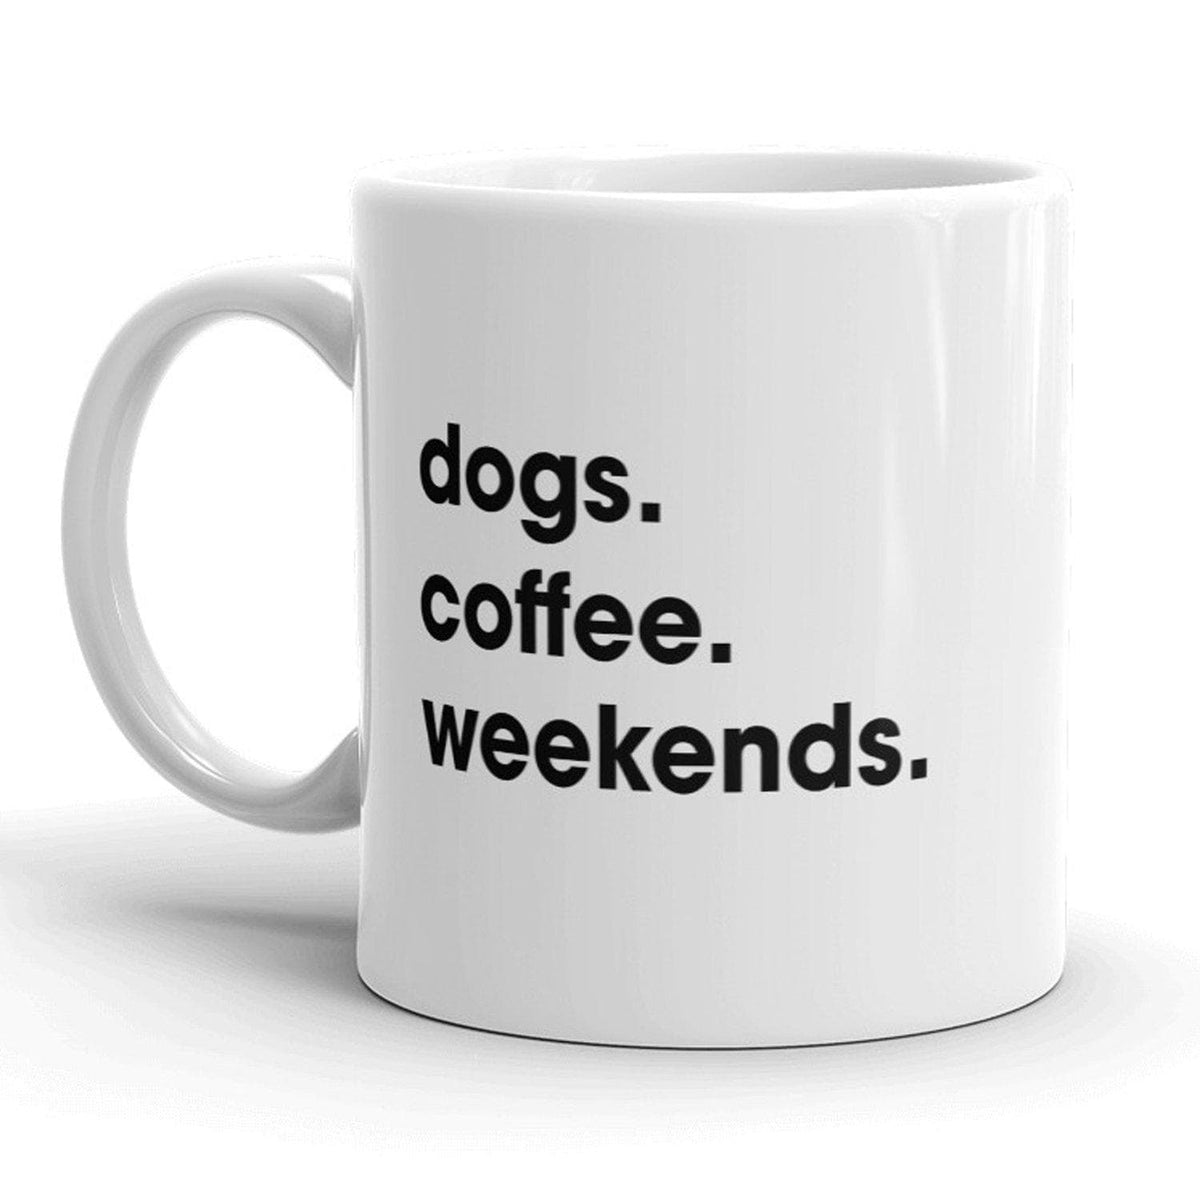 Dogs Coffee Weekends Mug - Crazy Dog T-Shirts